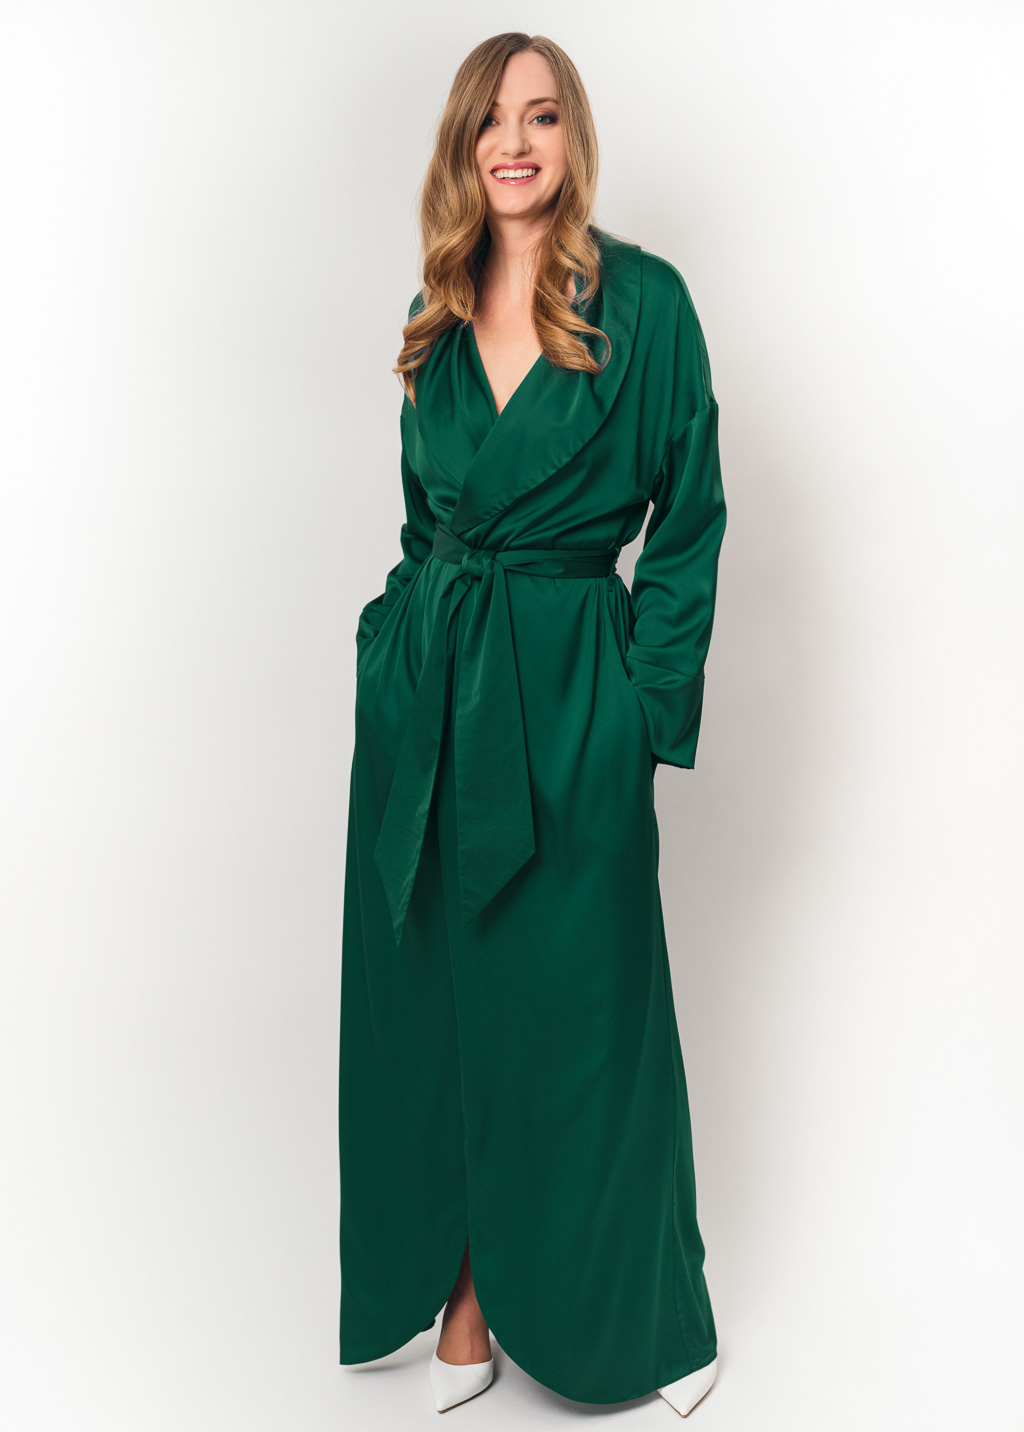 Emerald green long silk robe with pockets